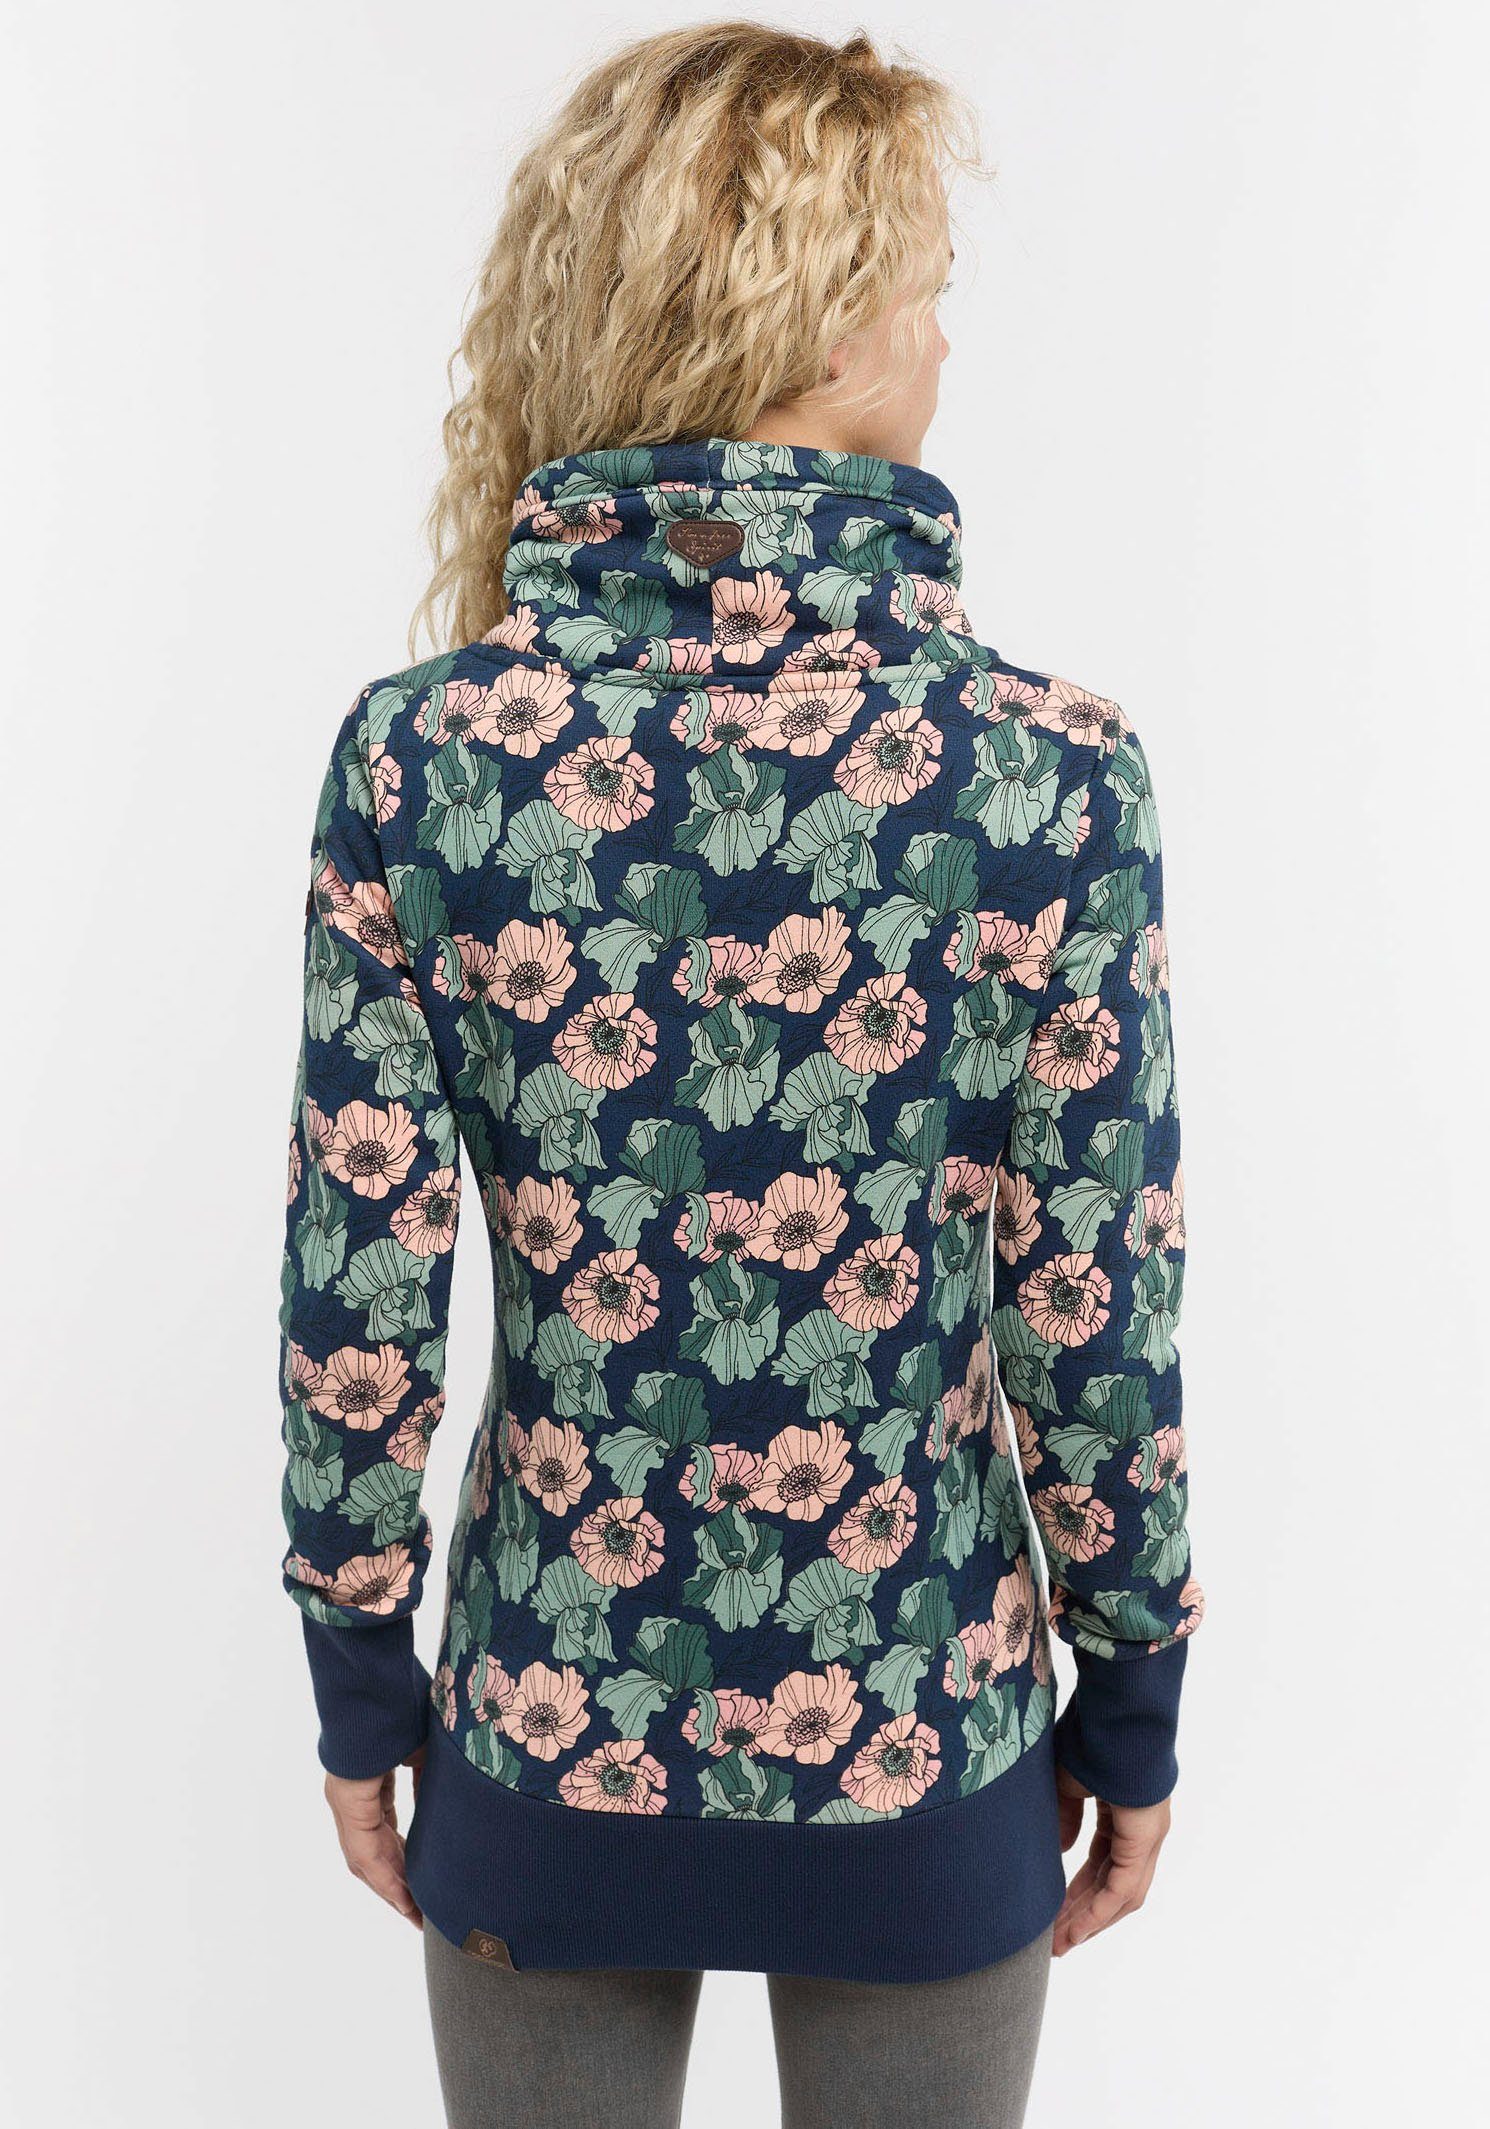 FREESIA NESKA Sweatshirts mit Allover Sweater Ragwear Print NAVY floralem